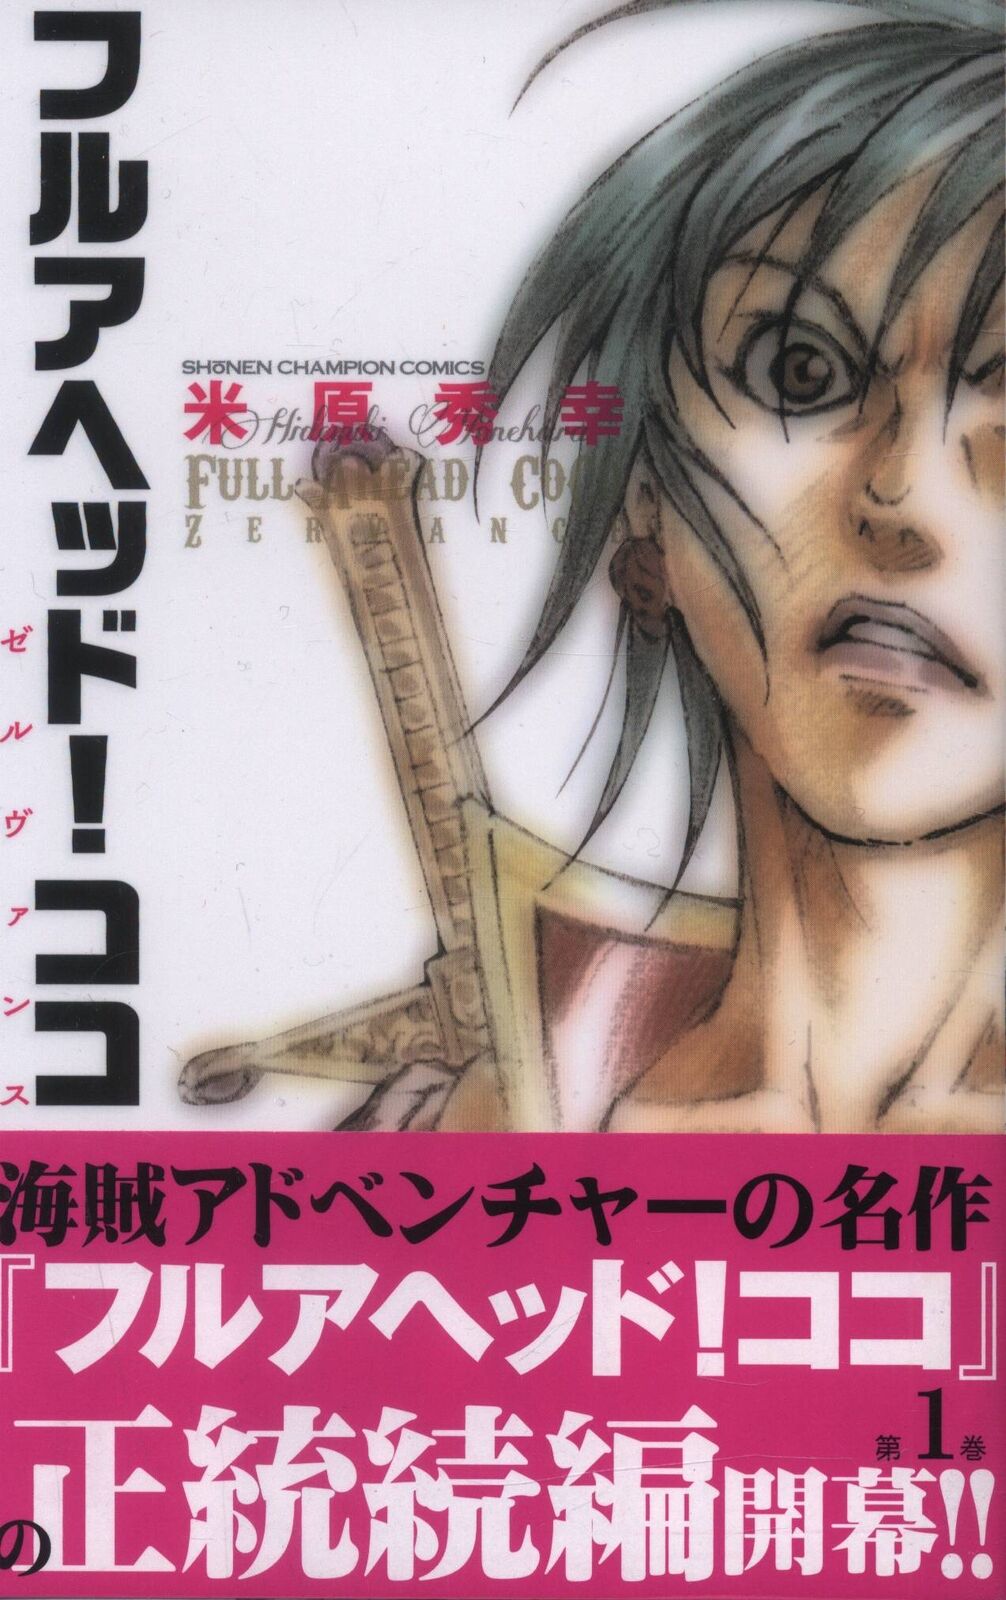 Japanese Manga Akita Shoten Shonen Champion Comics Hideyuki Yonehara Full Ah...